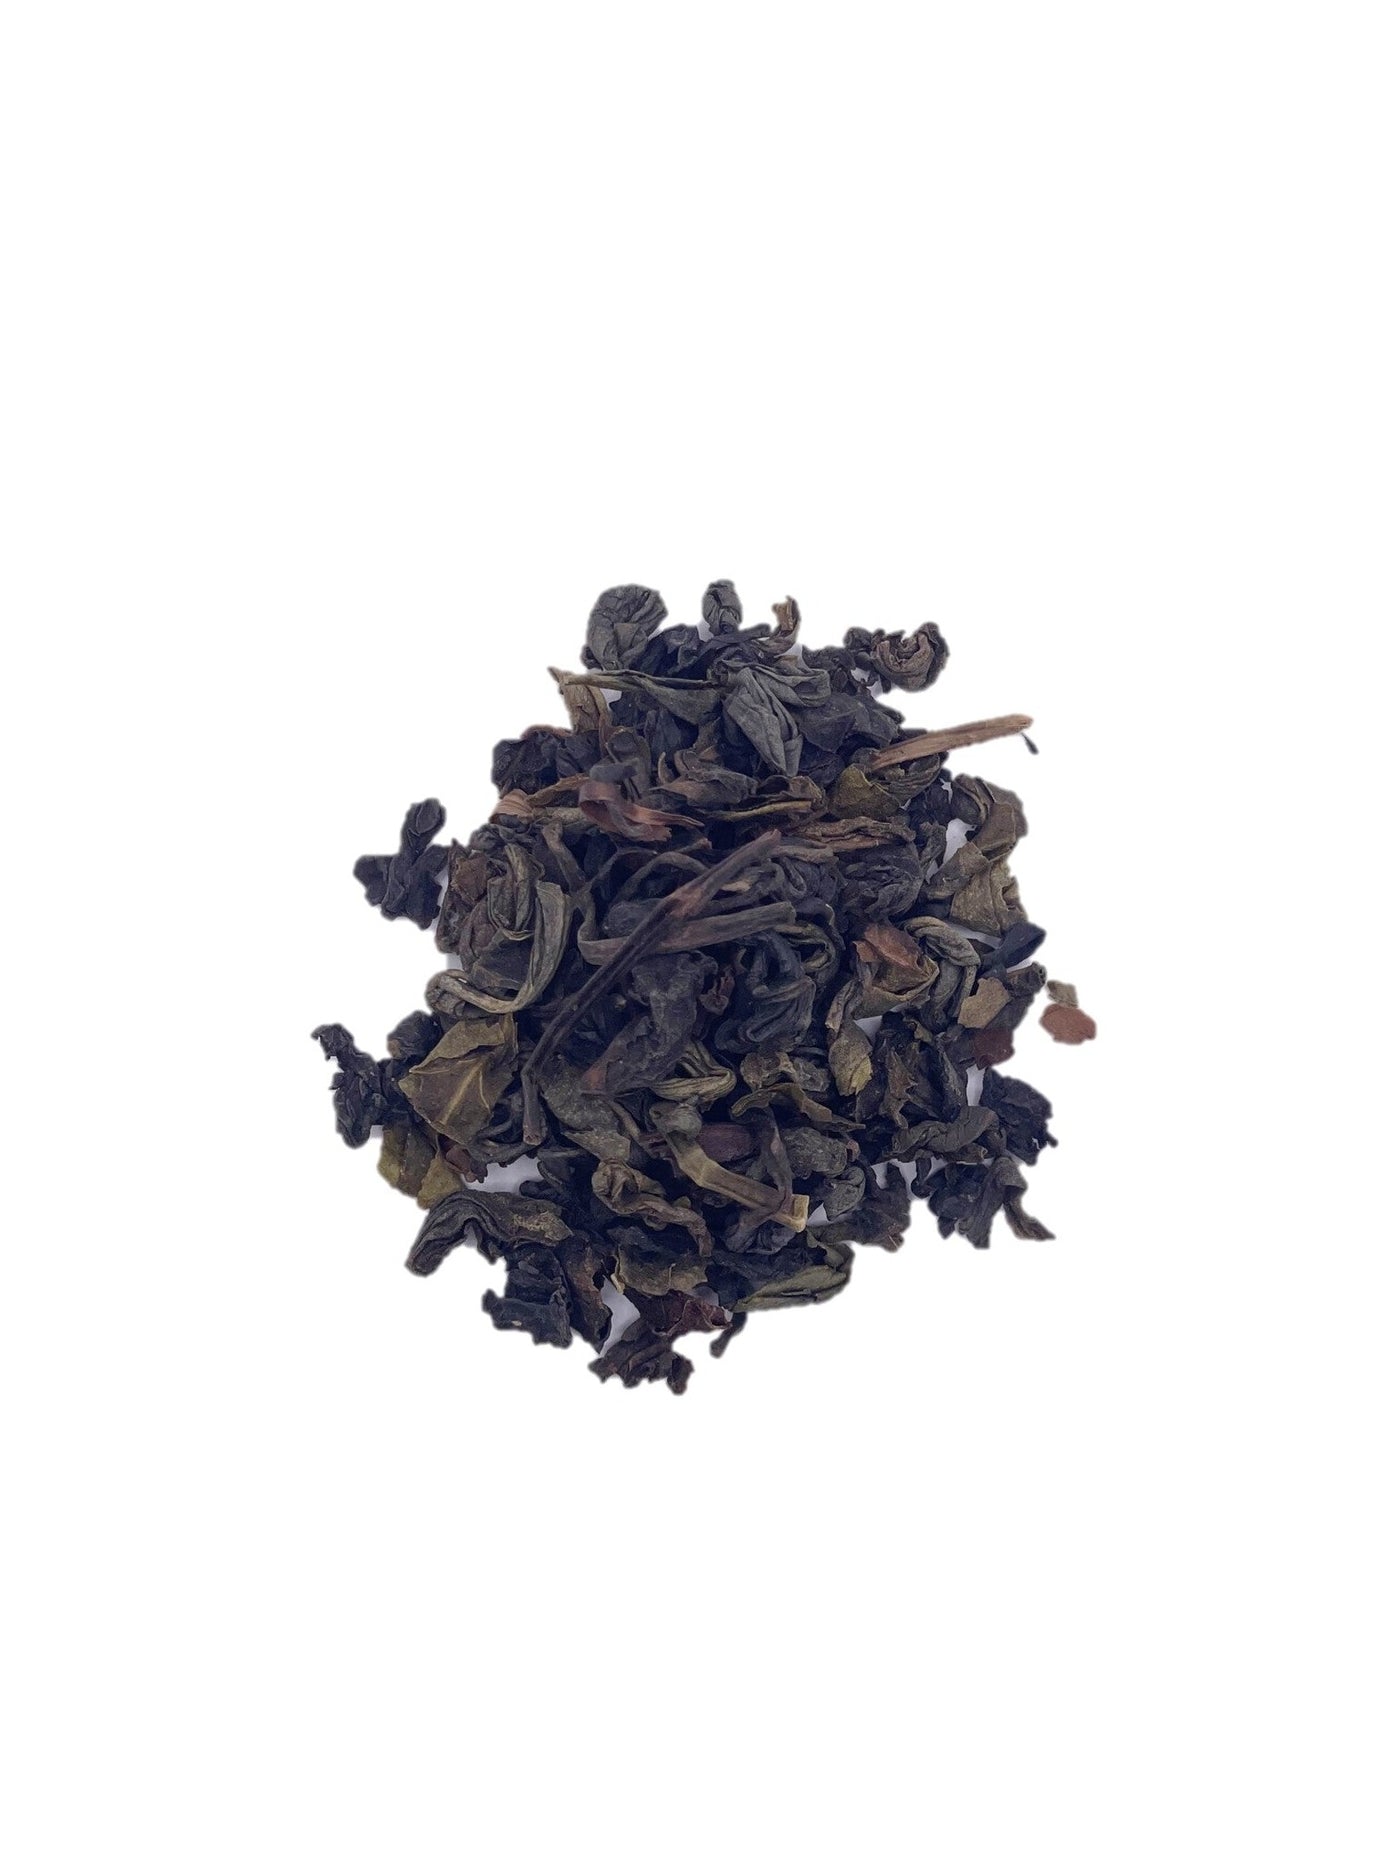 Ceylong Oolong - Vintage Teas